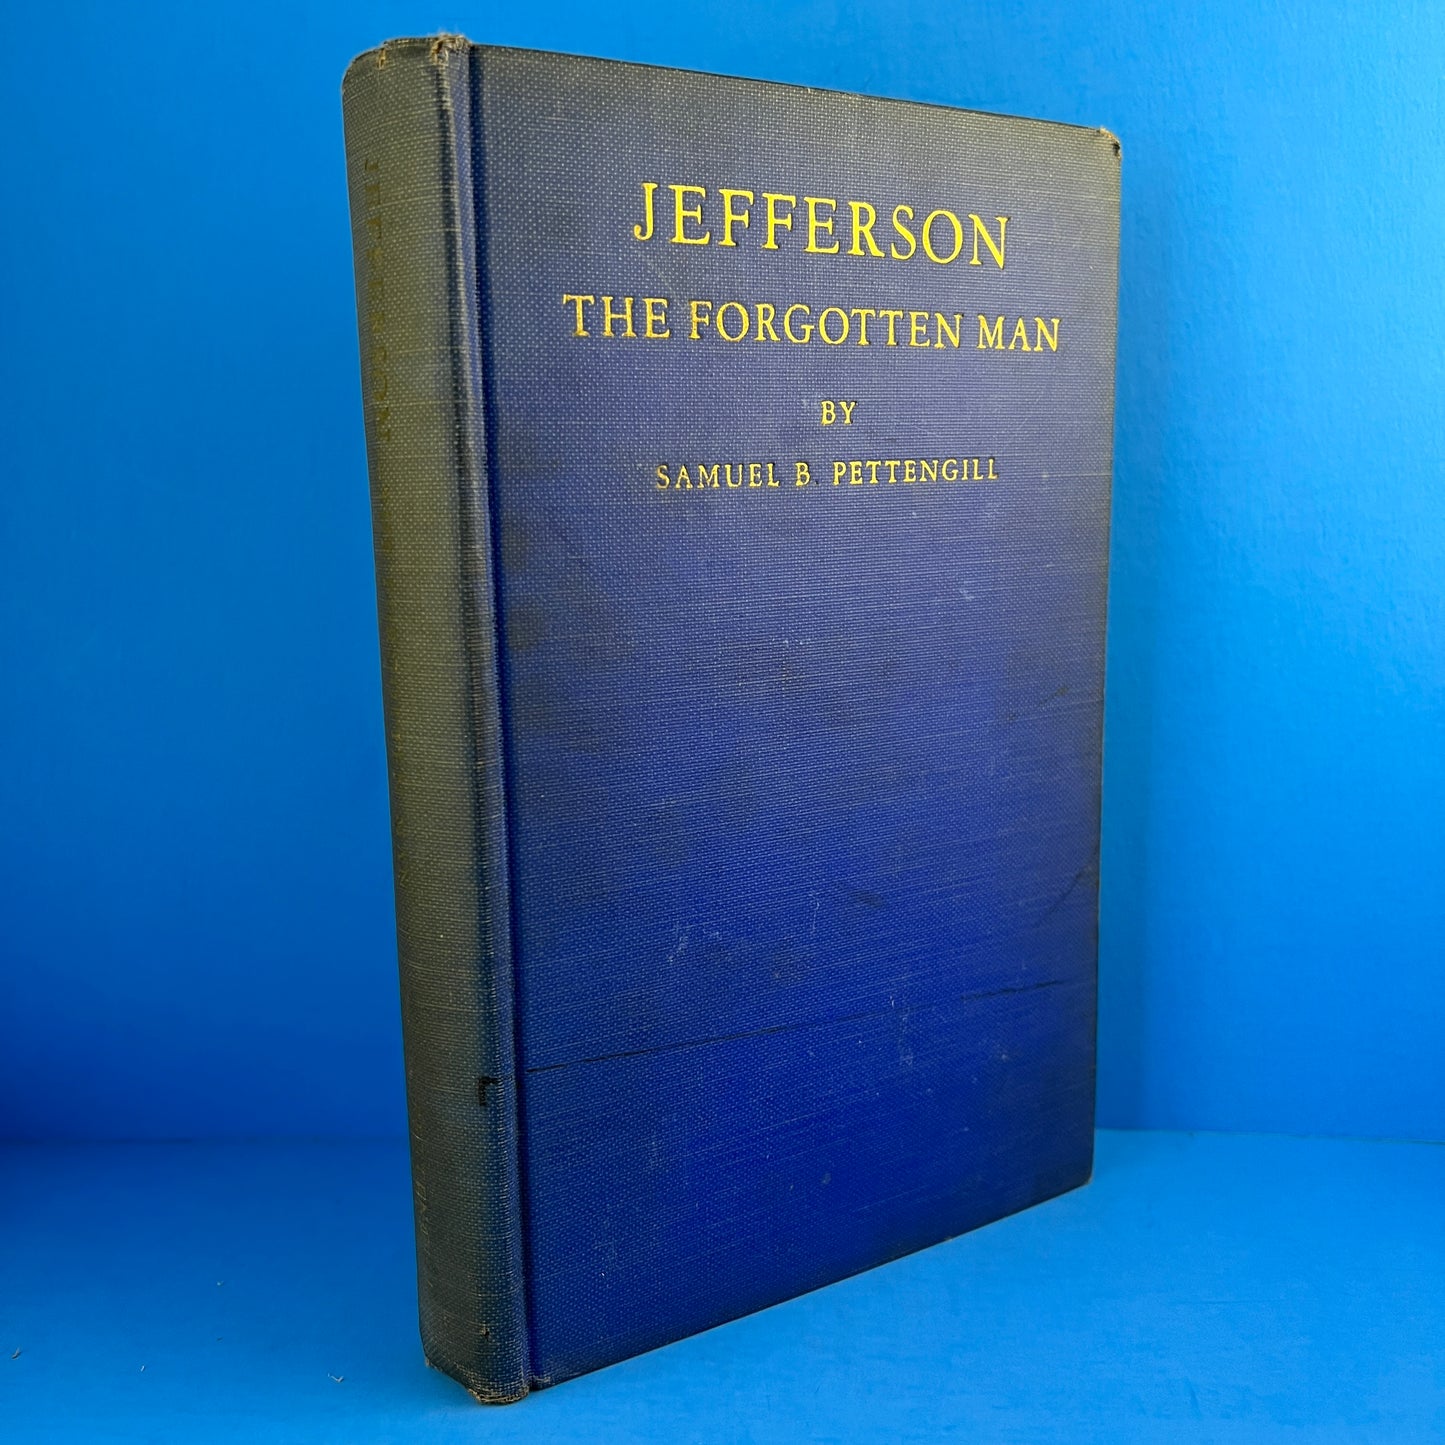 Jefferson: The Forgotten Man